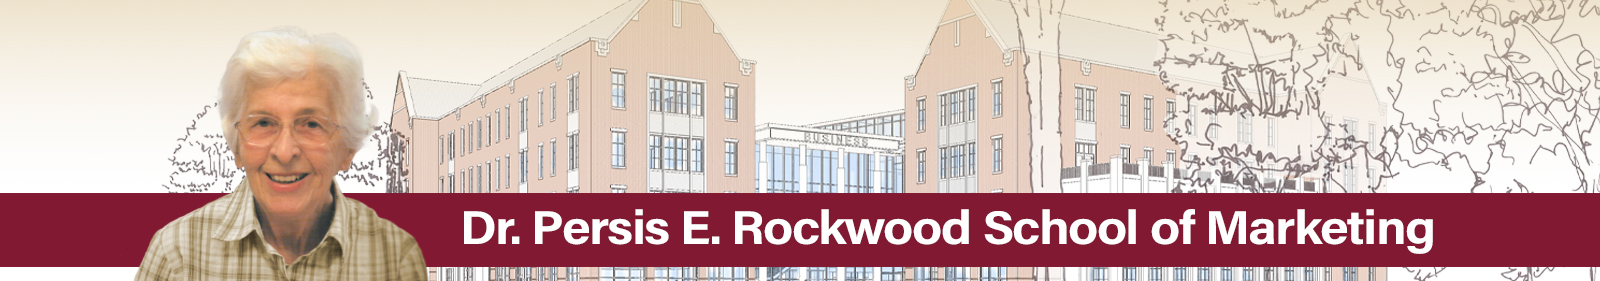 Dr. Persis E. Rockwood School of Marketing